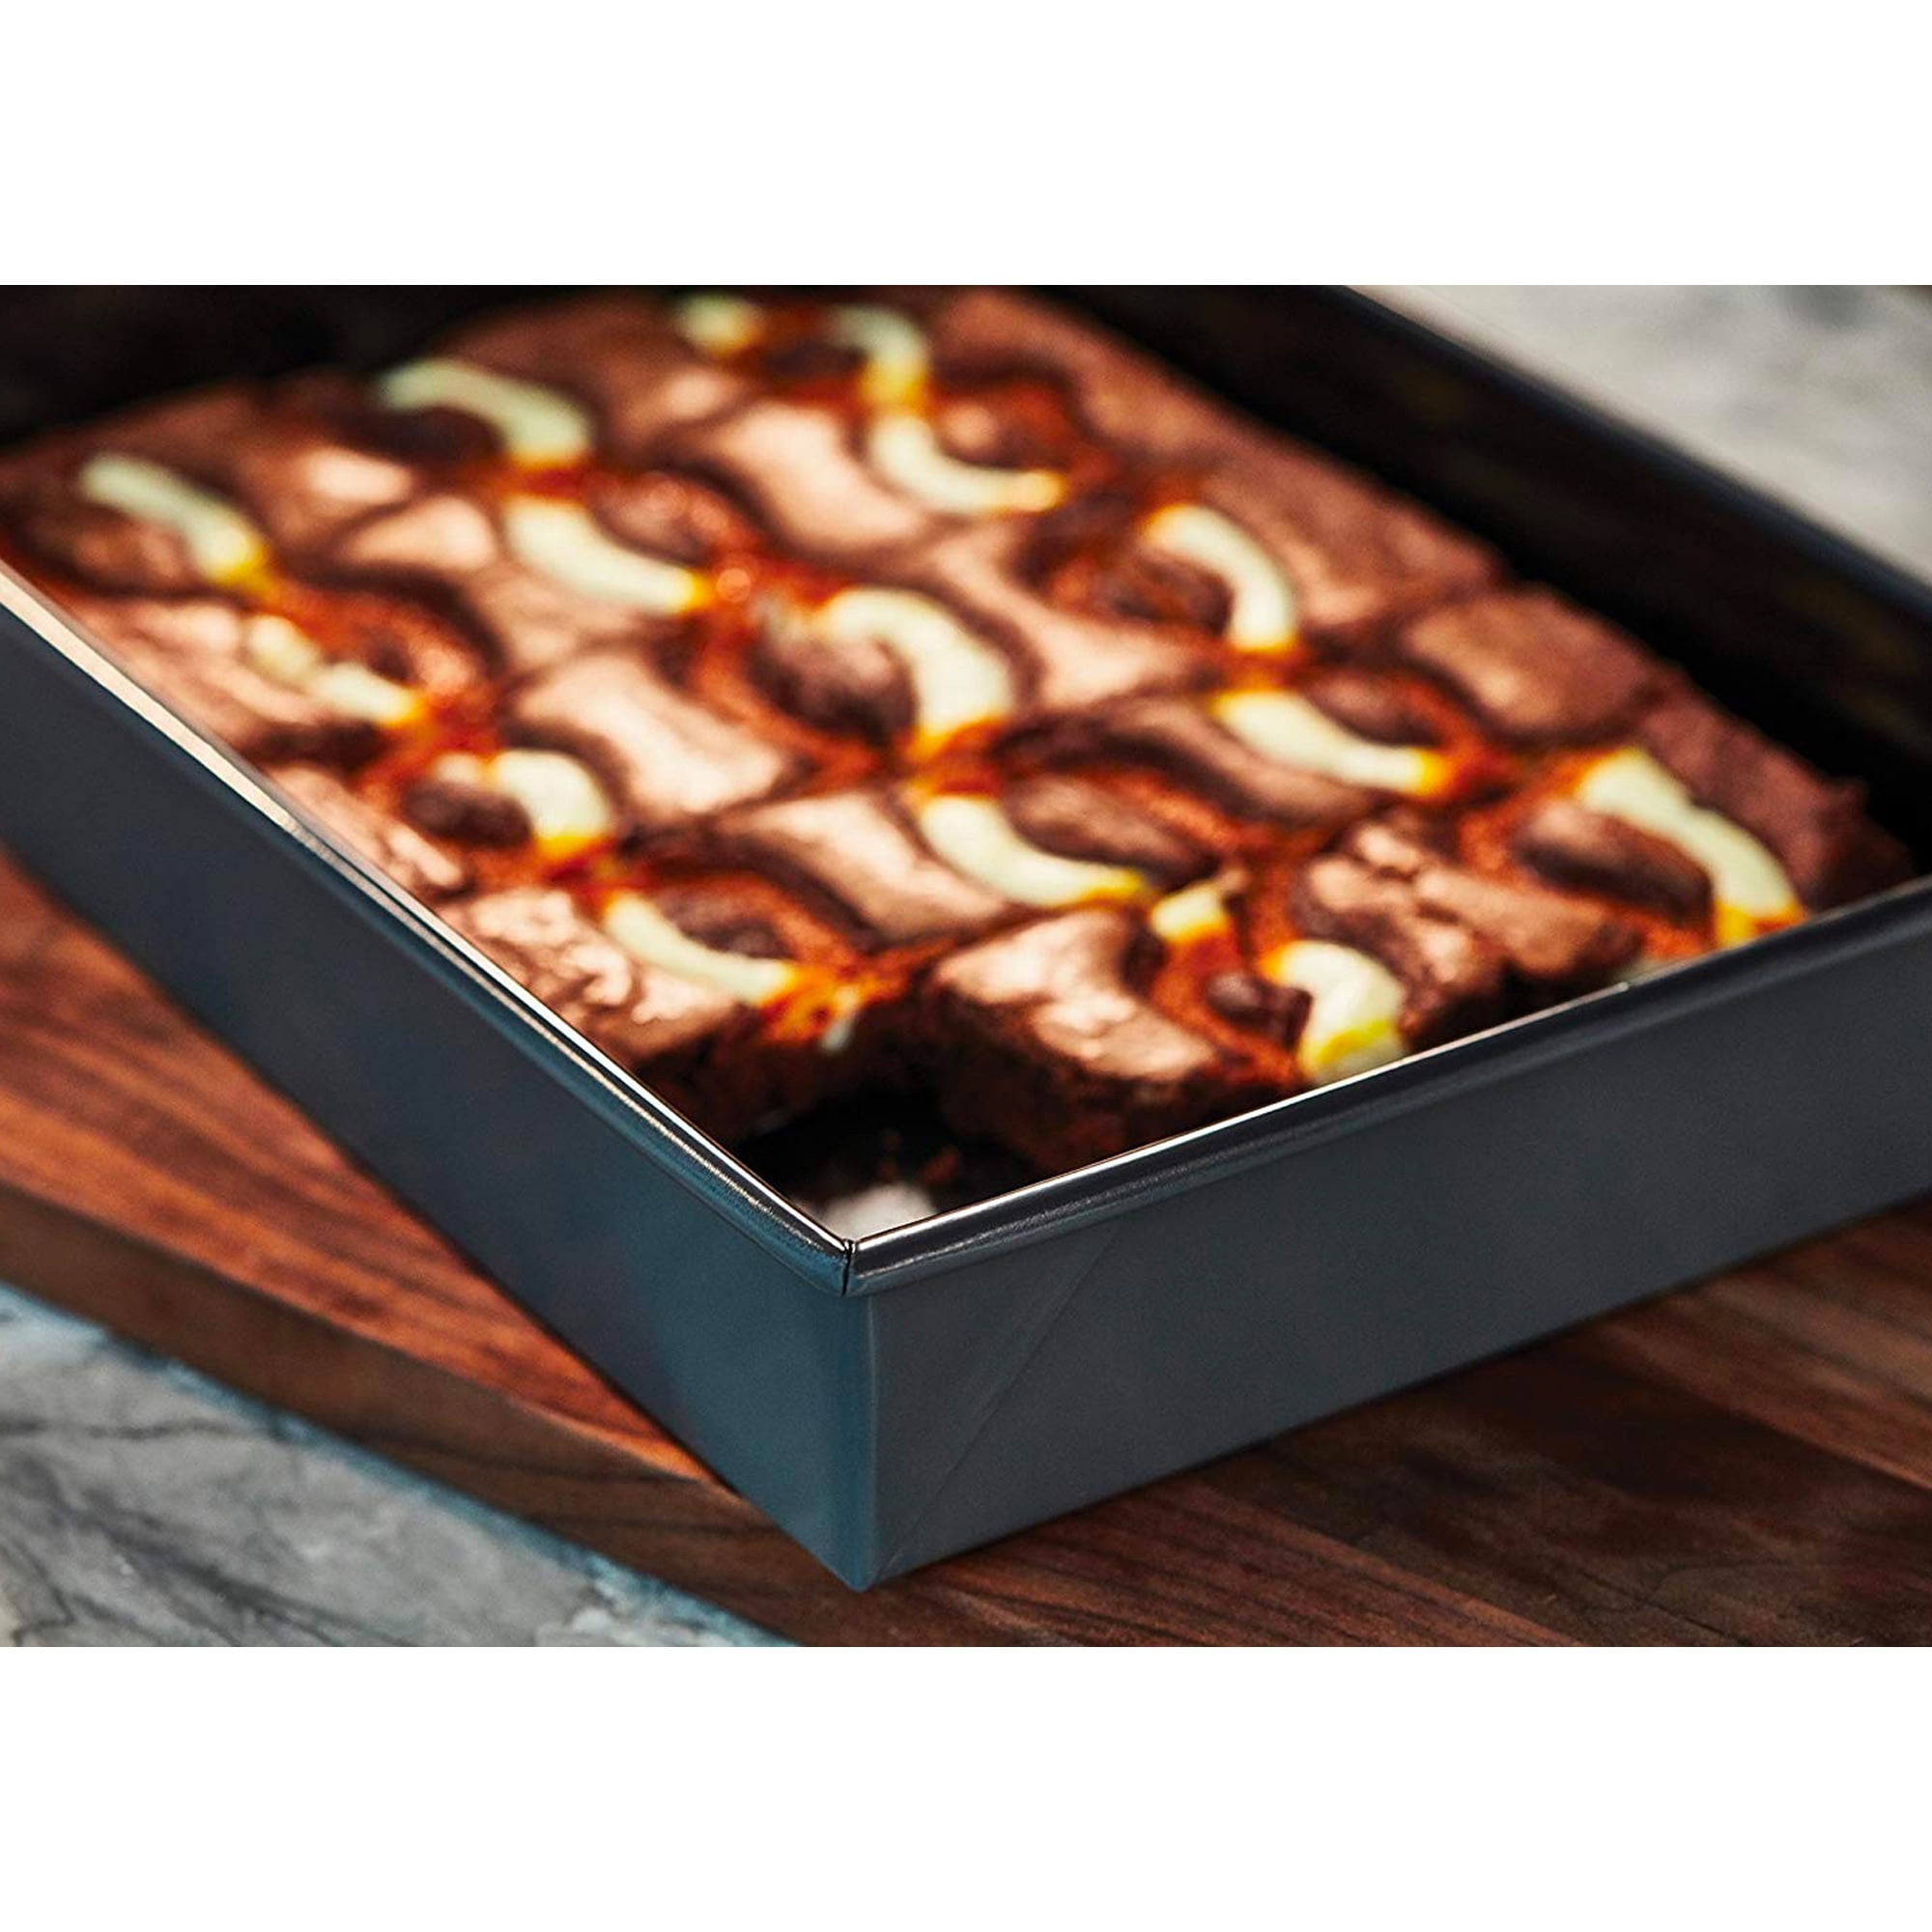 Calphalon Nonstick Bakeware 9x13-inch Brownie Pan